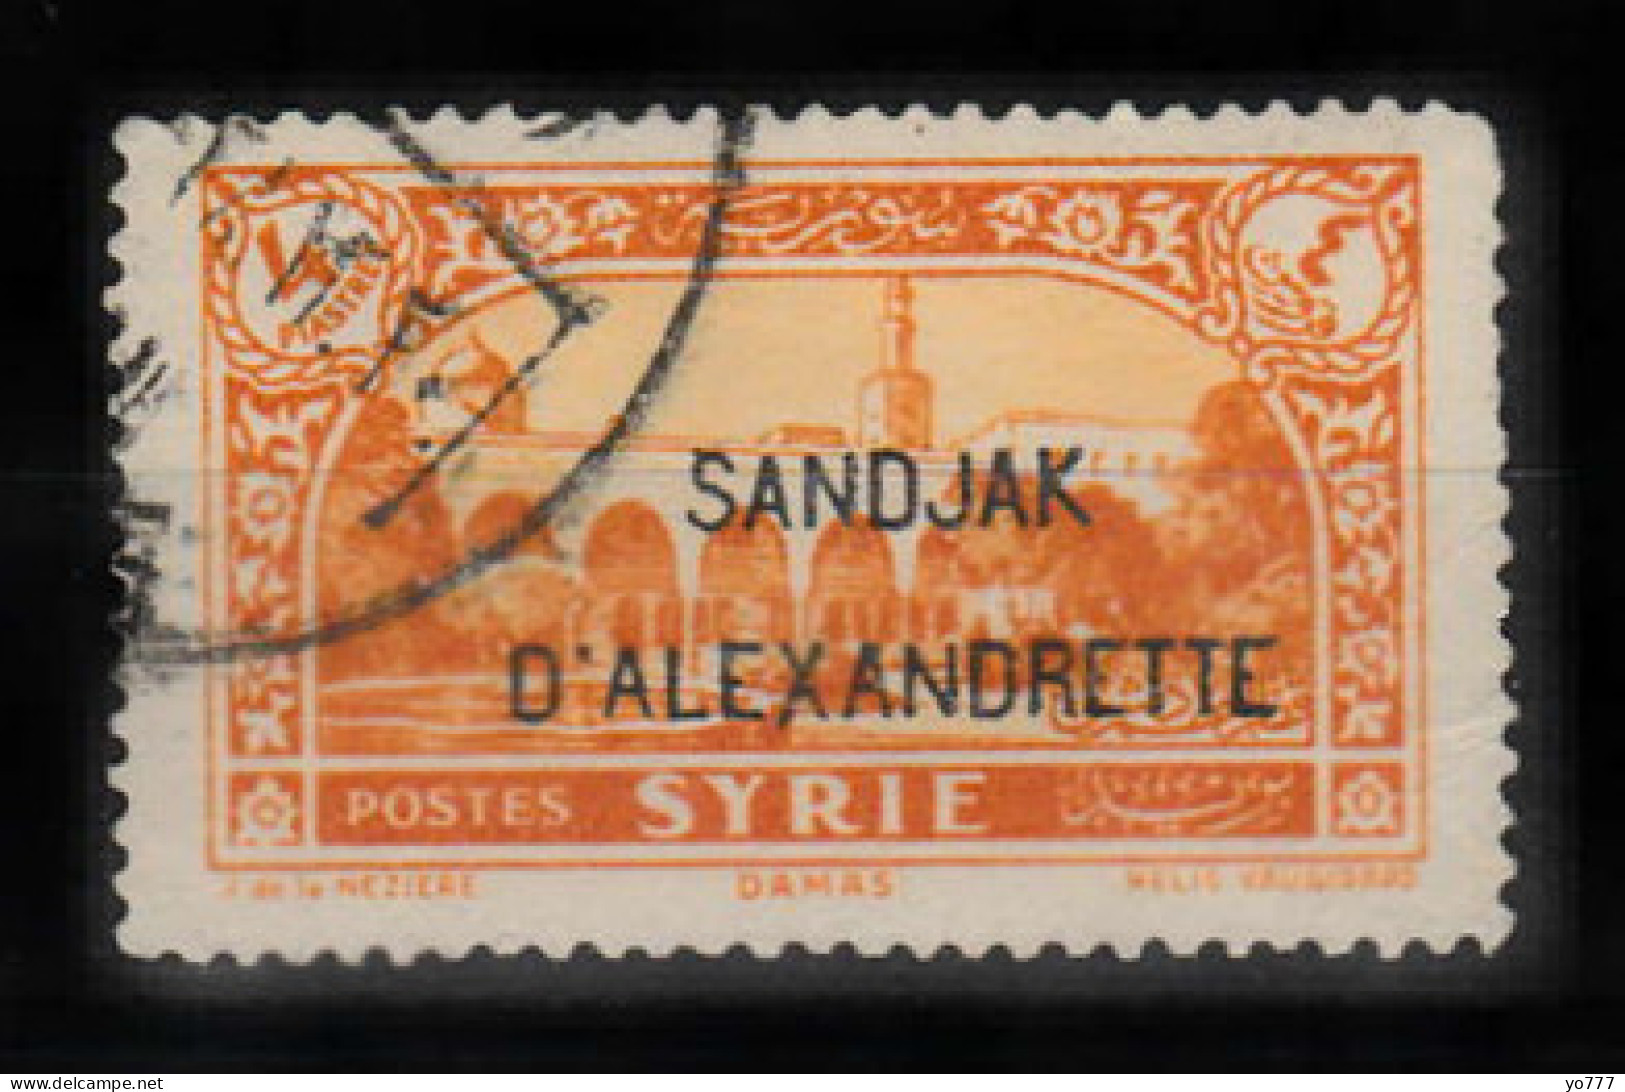 (H-08) 1938 HATAY STAMPS WITH RED AND BLACK SANDJAK D'ALEXANDRETTE OVERPRINT ON SYRIA POSTAGE STAMPS USED - 1934-39 Sandjak D'Alexandrette & Hatay